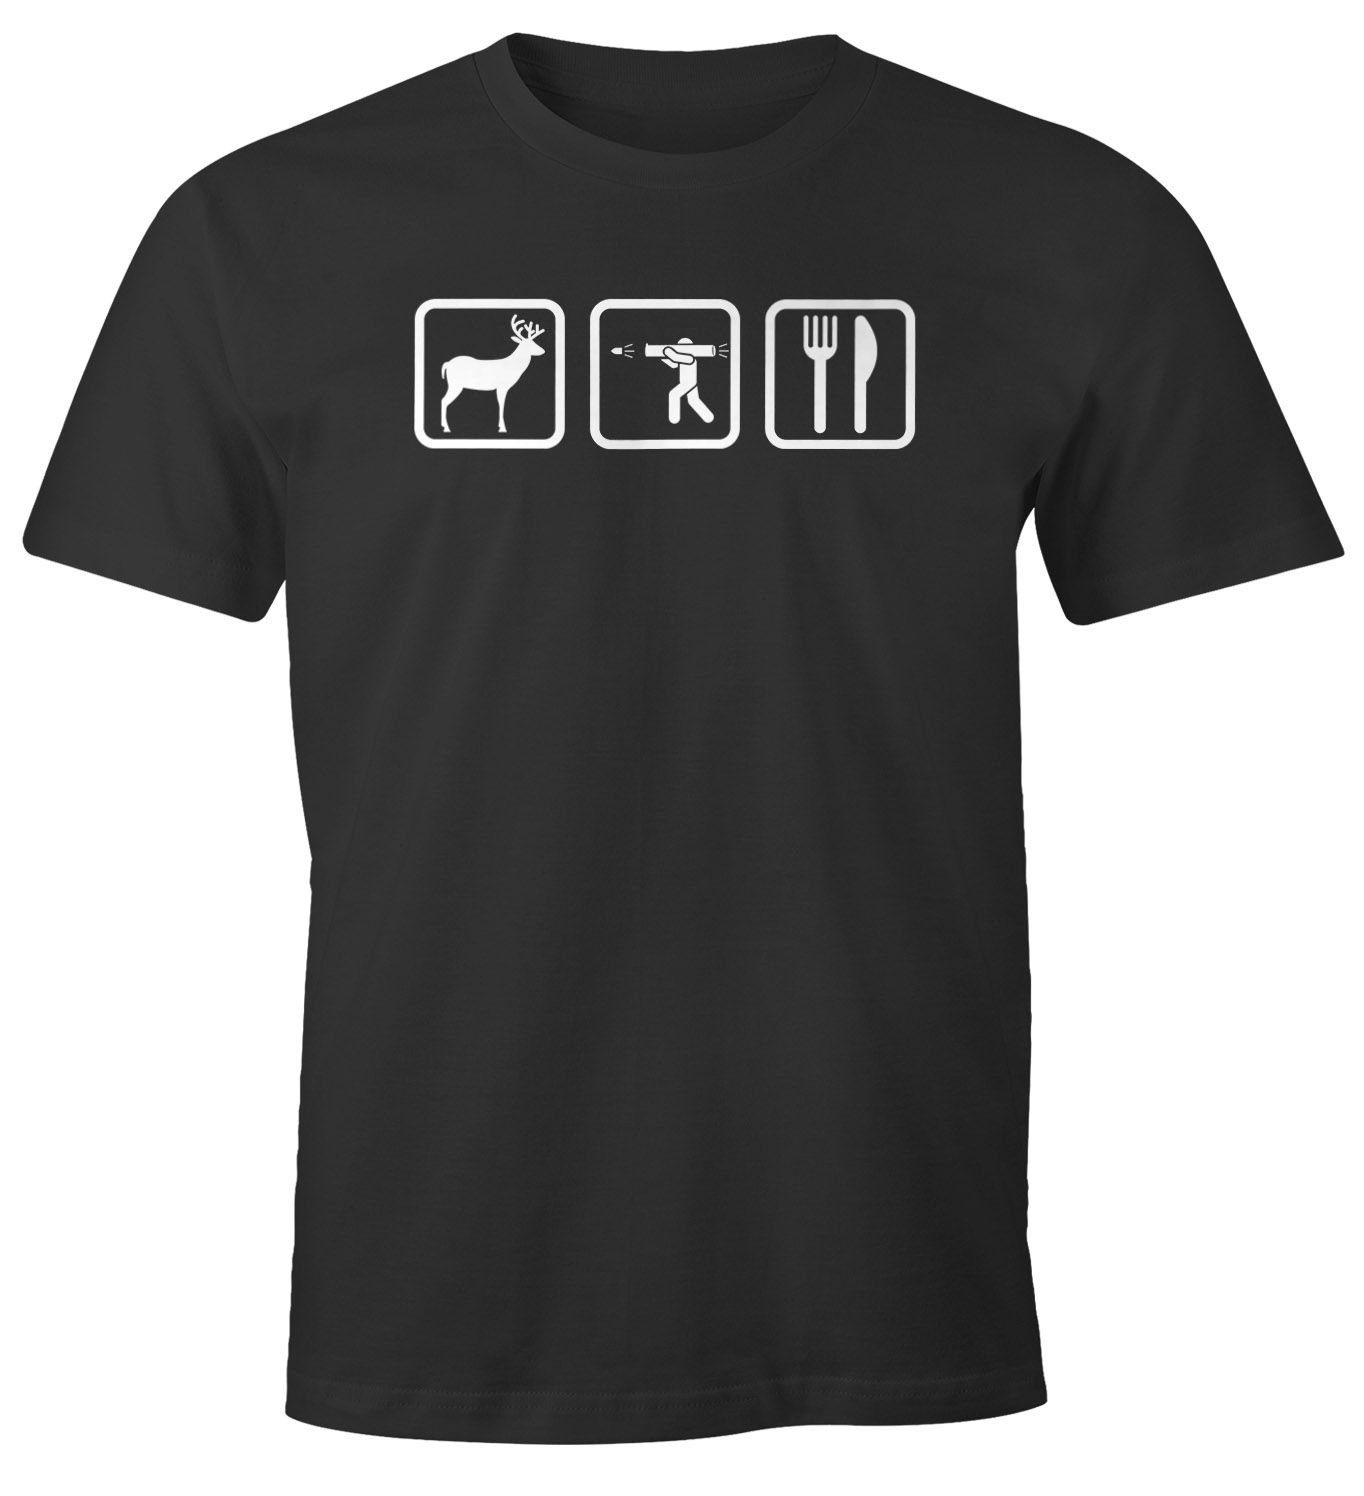 MoonWorks Print-Shirt Herren T-Shirt Kochhirt Grillshirt mit Symbolen Hirsch Jäger Besteck Fun-Shirt Moonworks® mit Print